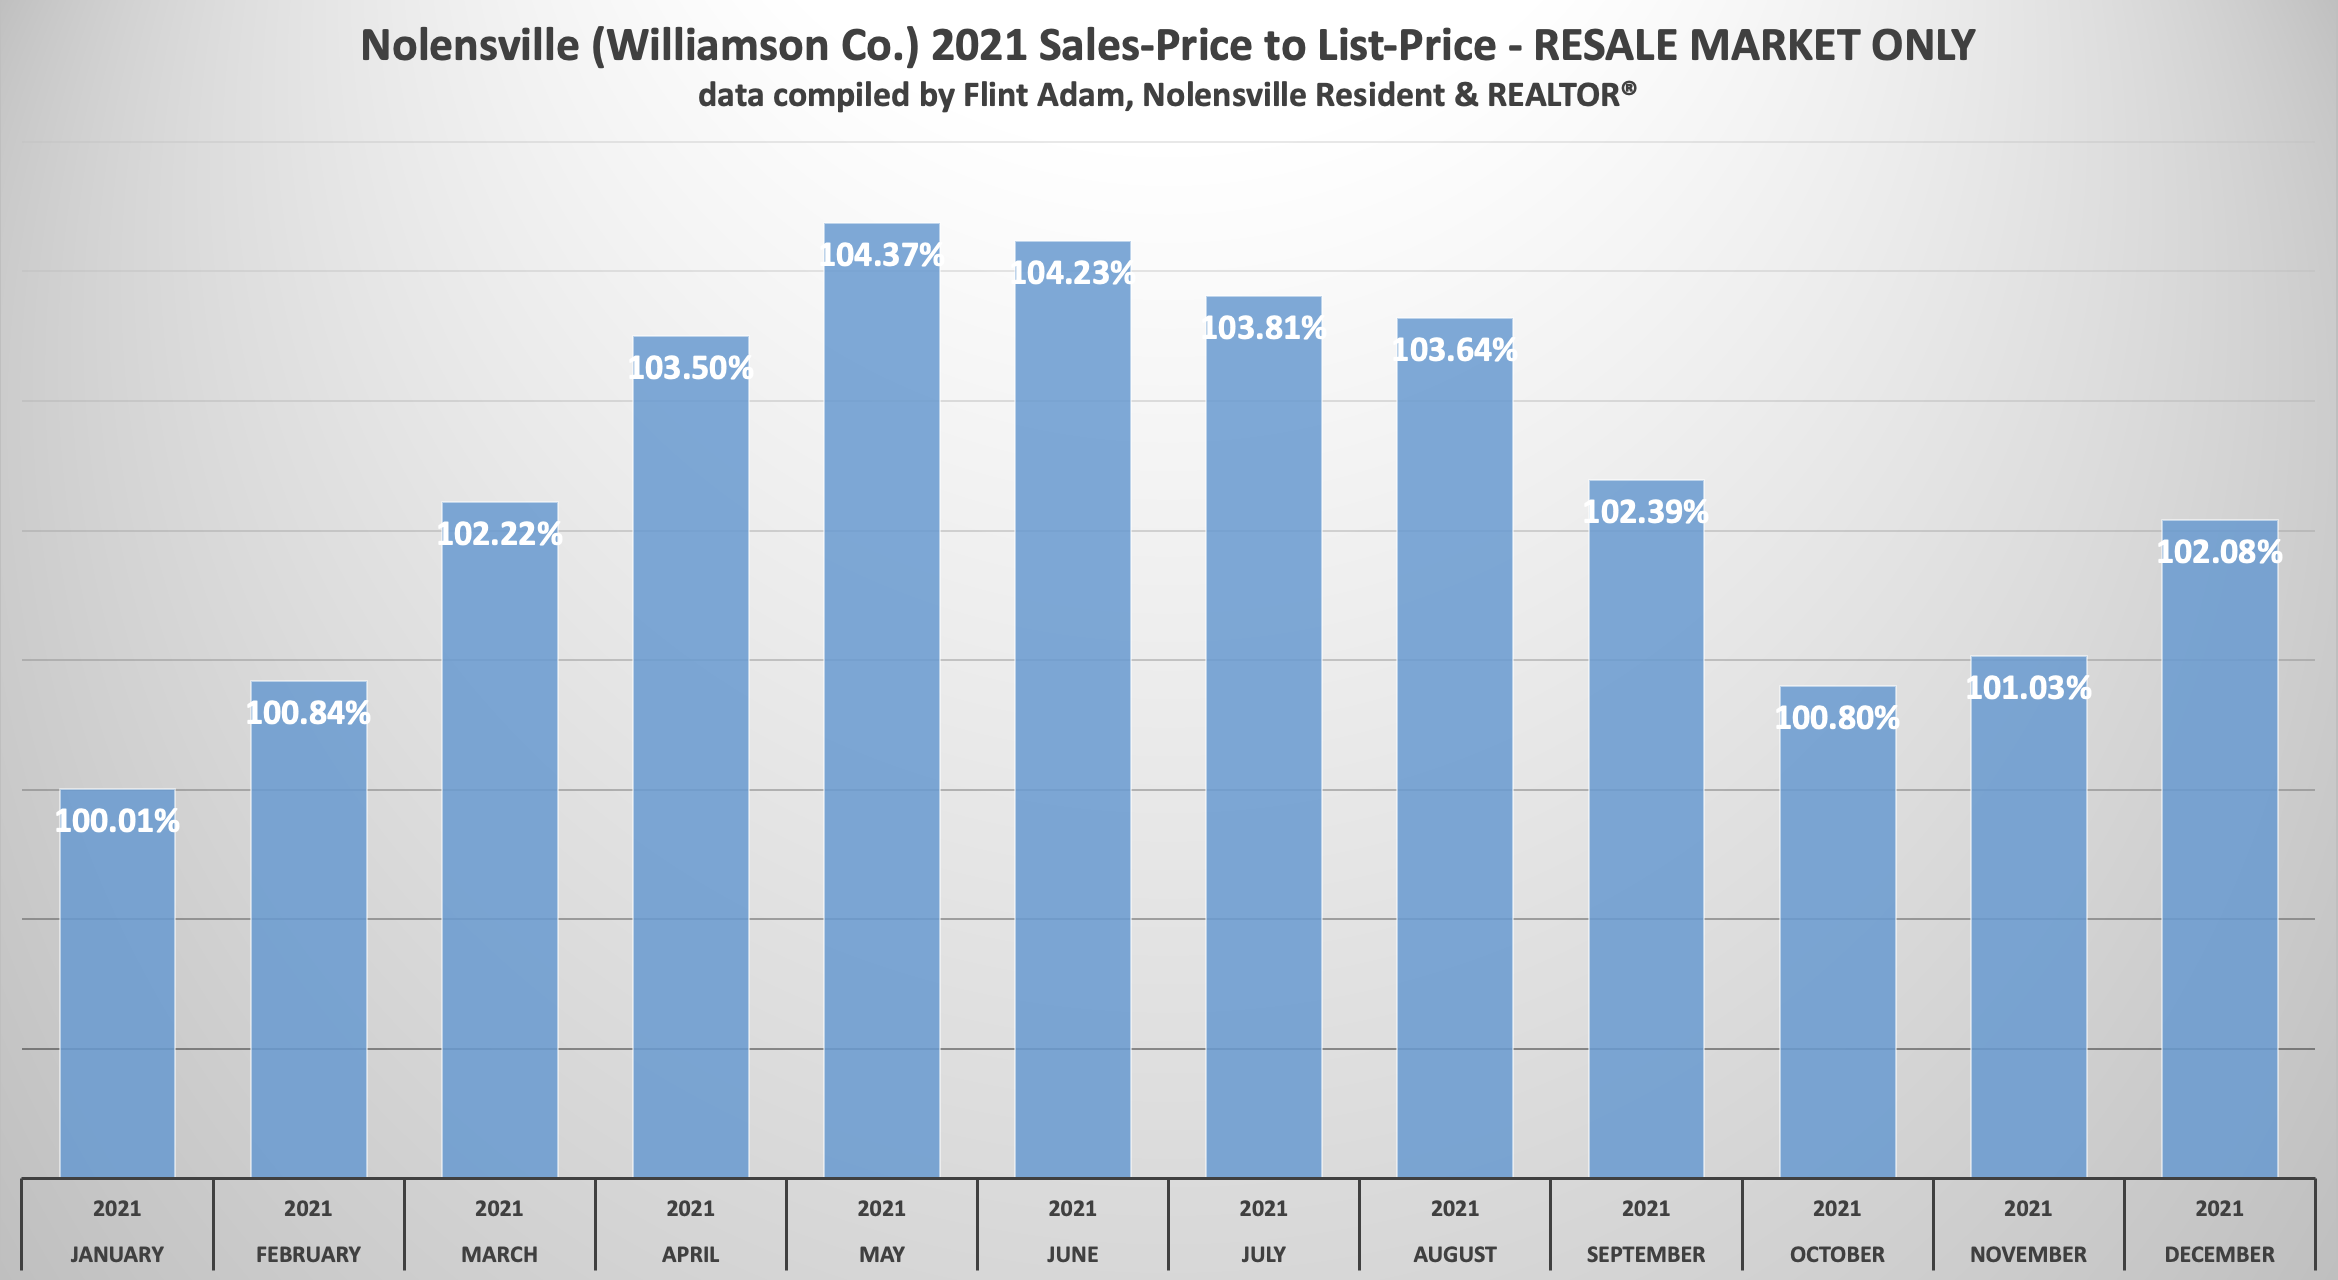 Nolensville TN Sales Price to List Price Ratios - Calendar Year 2021